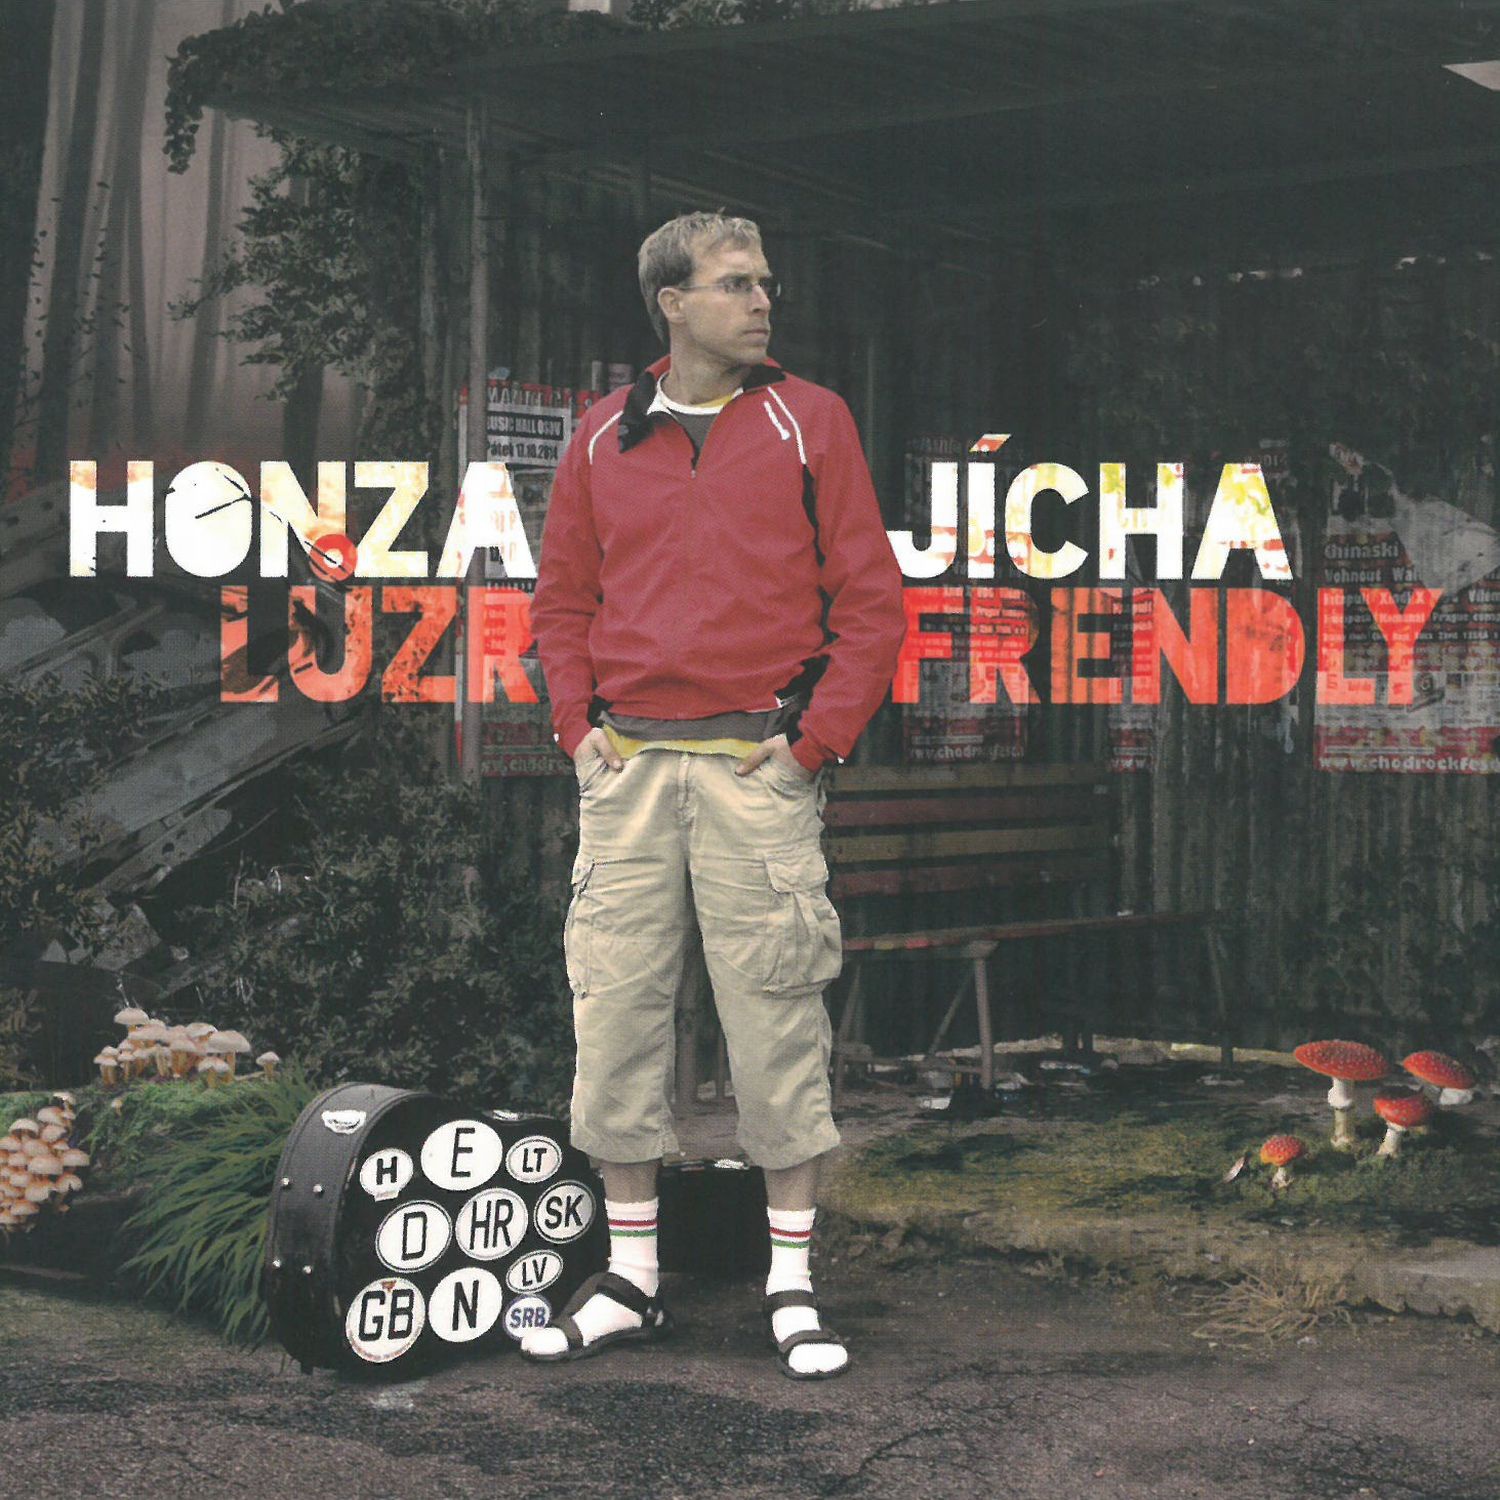 CD Shop - JICHA HONZA LUZR FRENDLY